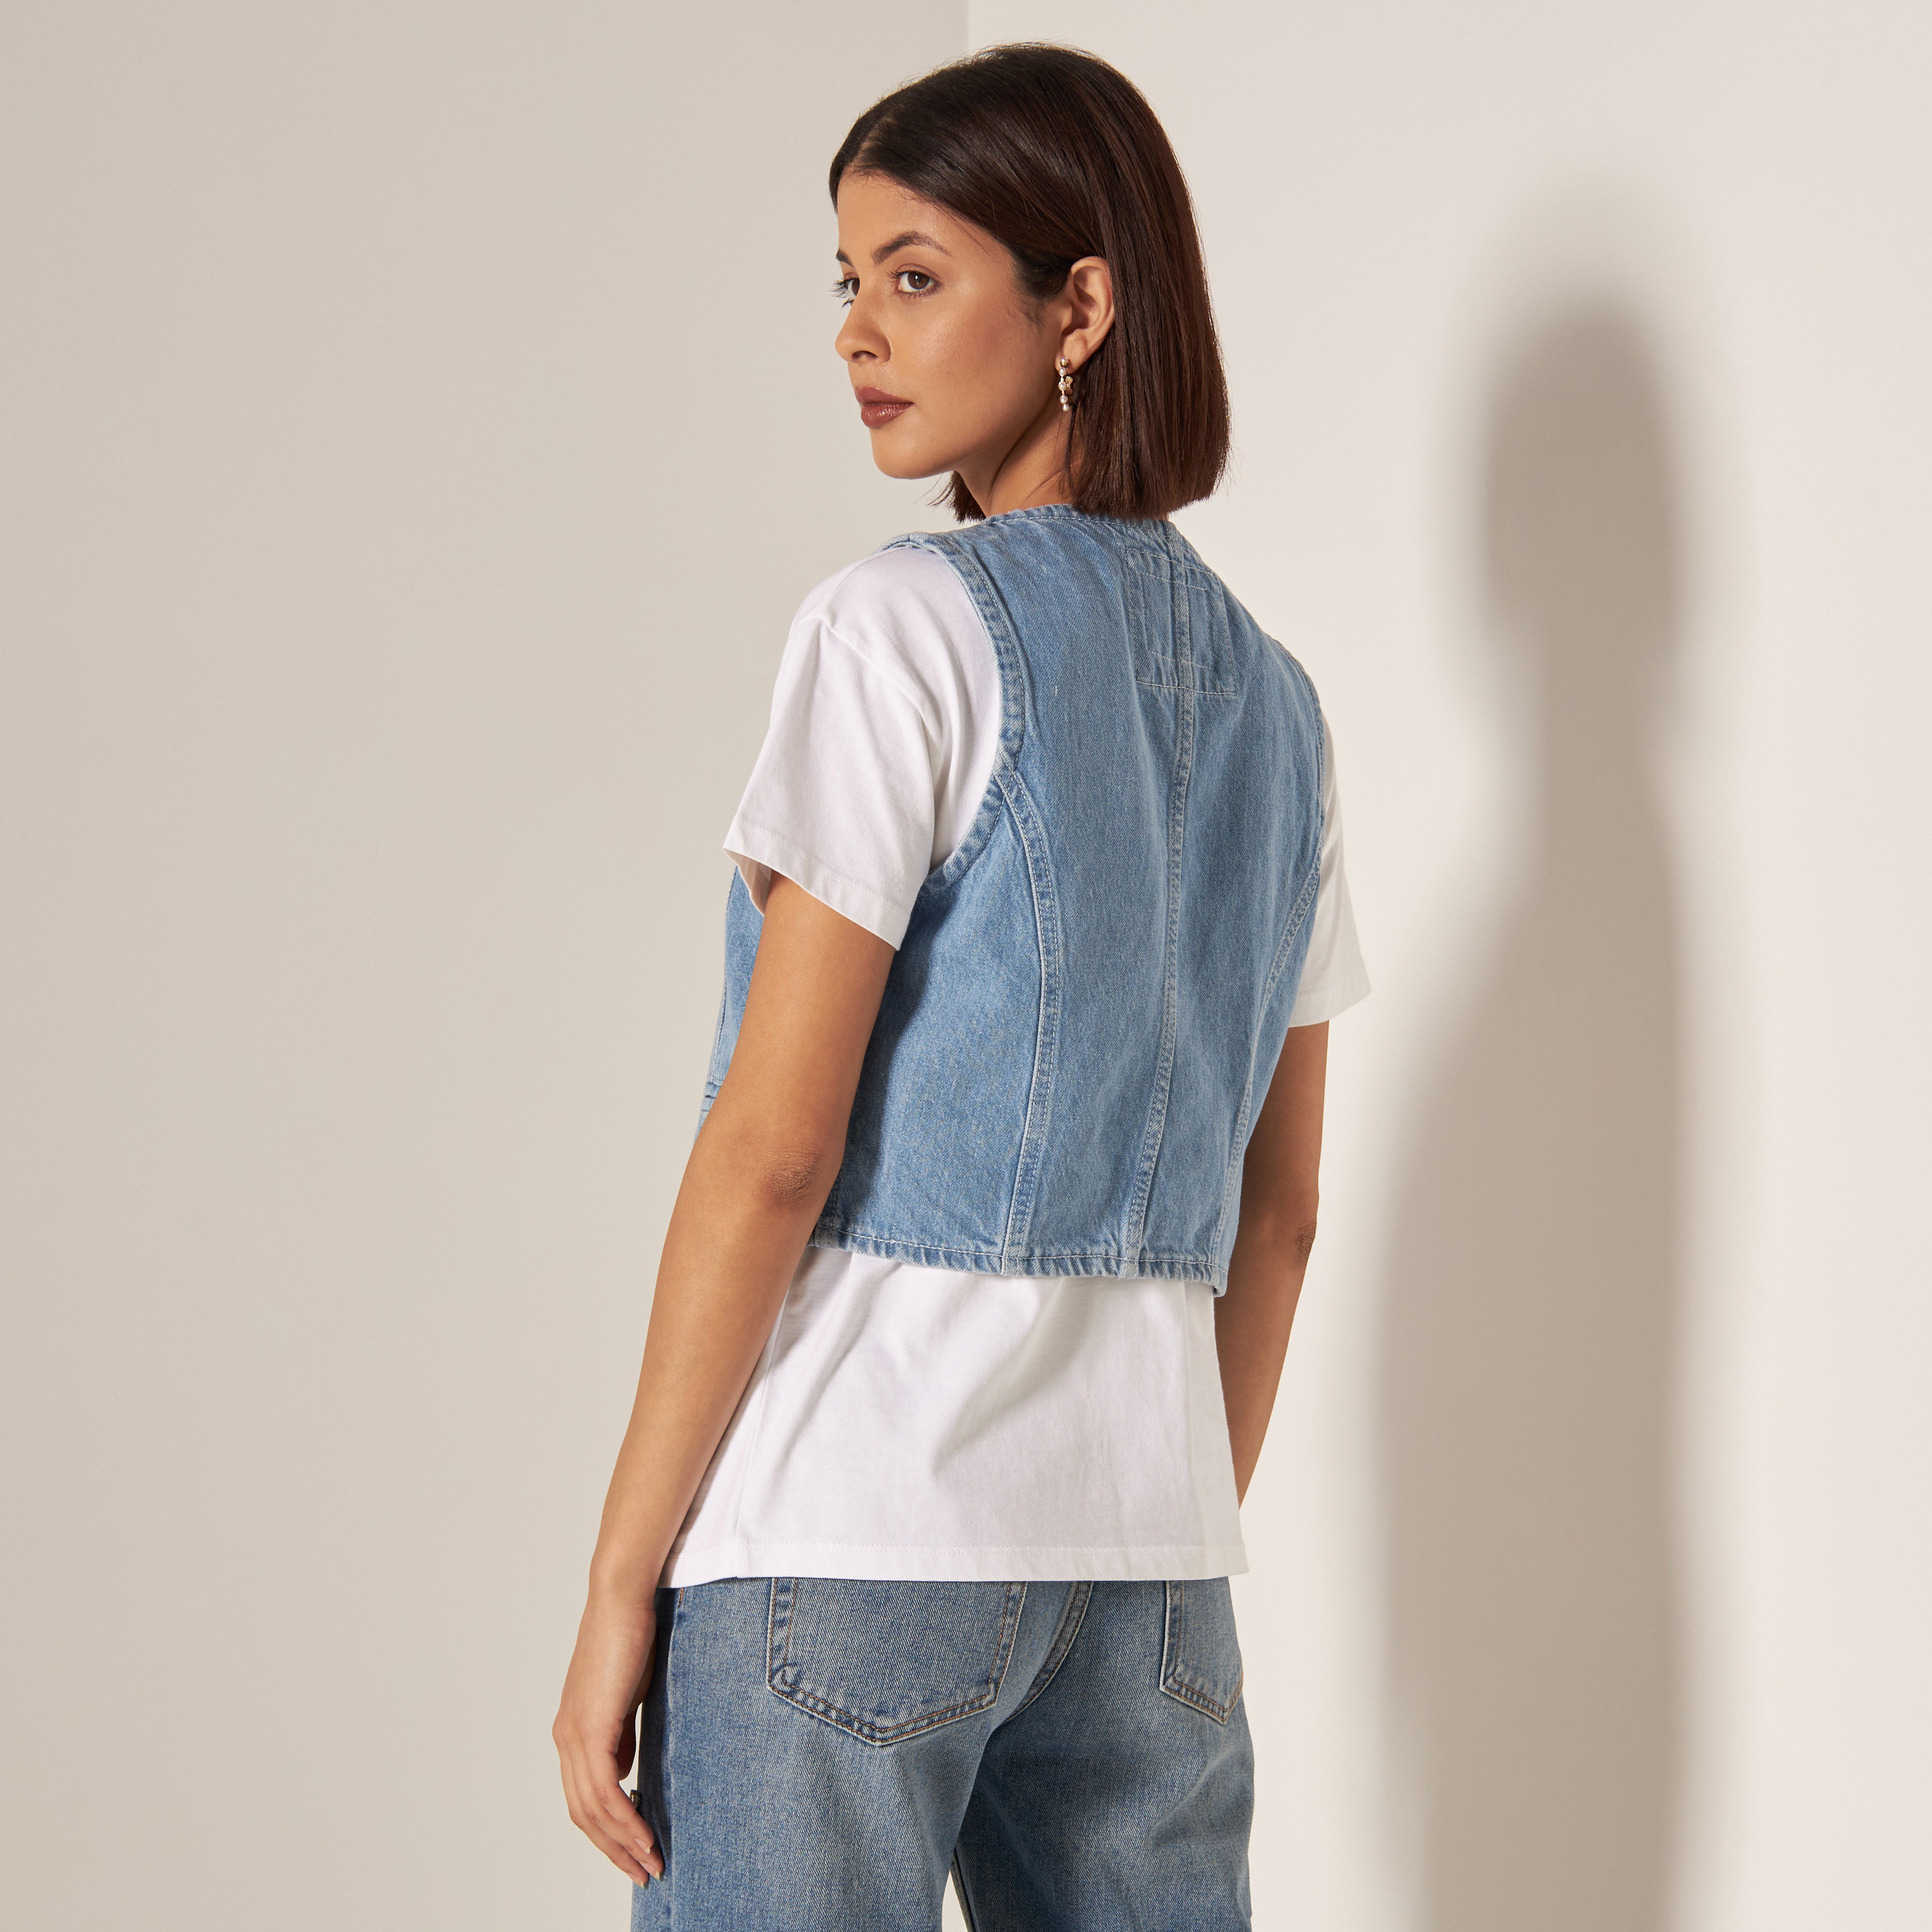 Buy Kotty Blue Sleeveless Denim Jacket for Women's Online @ Tata CLiQ